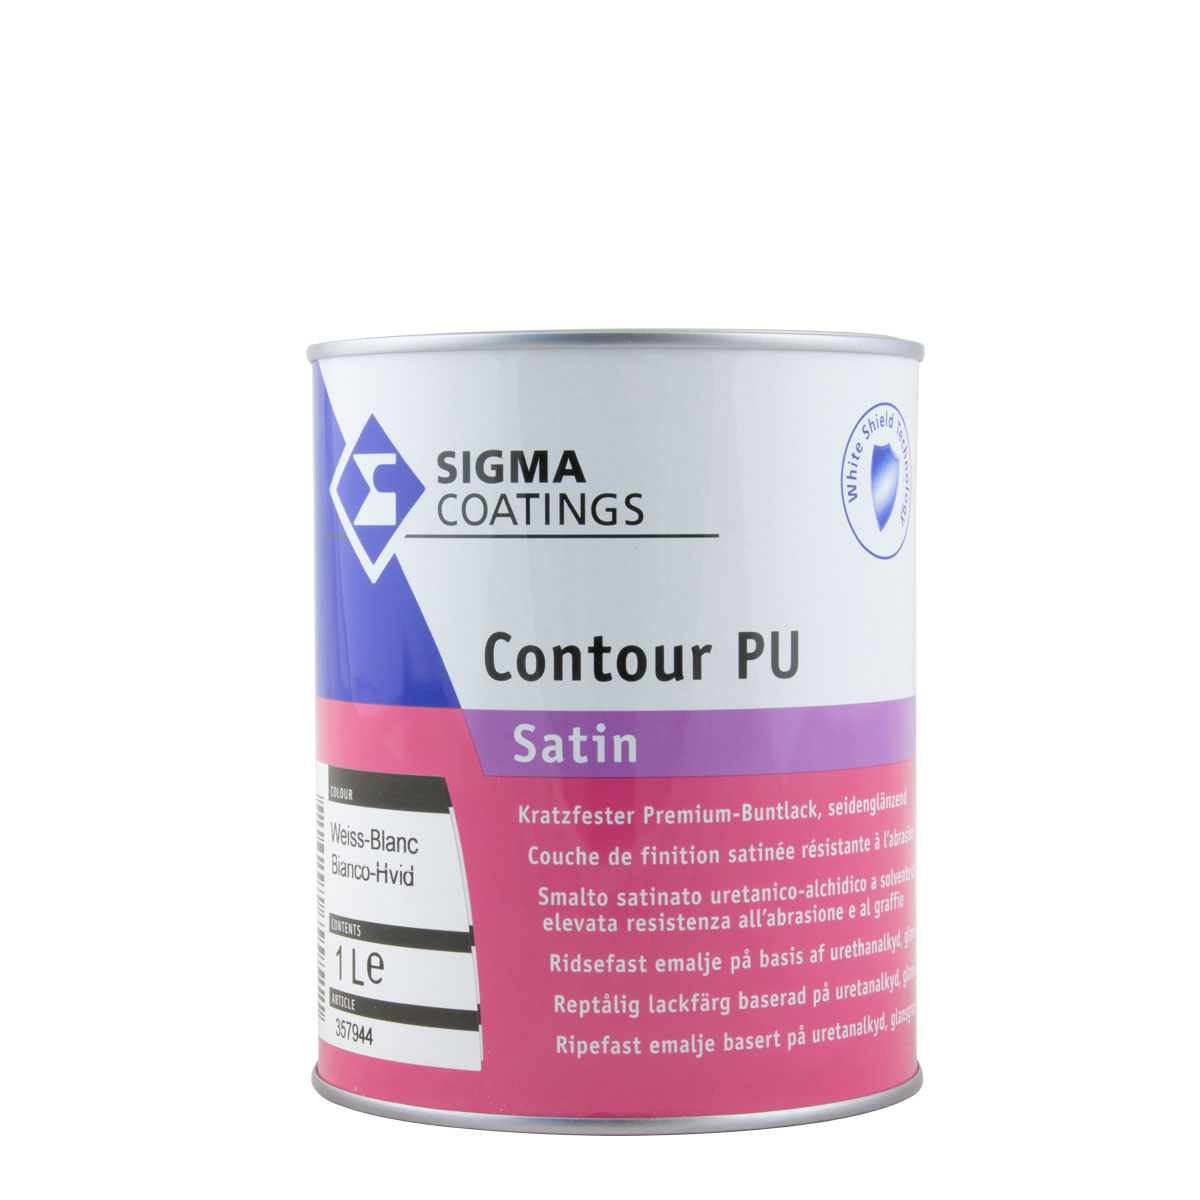 Sigma_coatings_contour_Pu-Satin_1l_gross